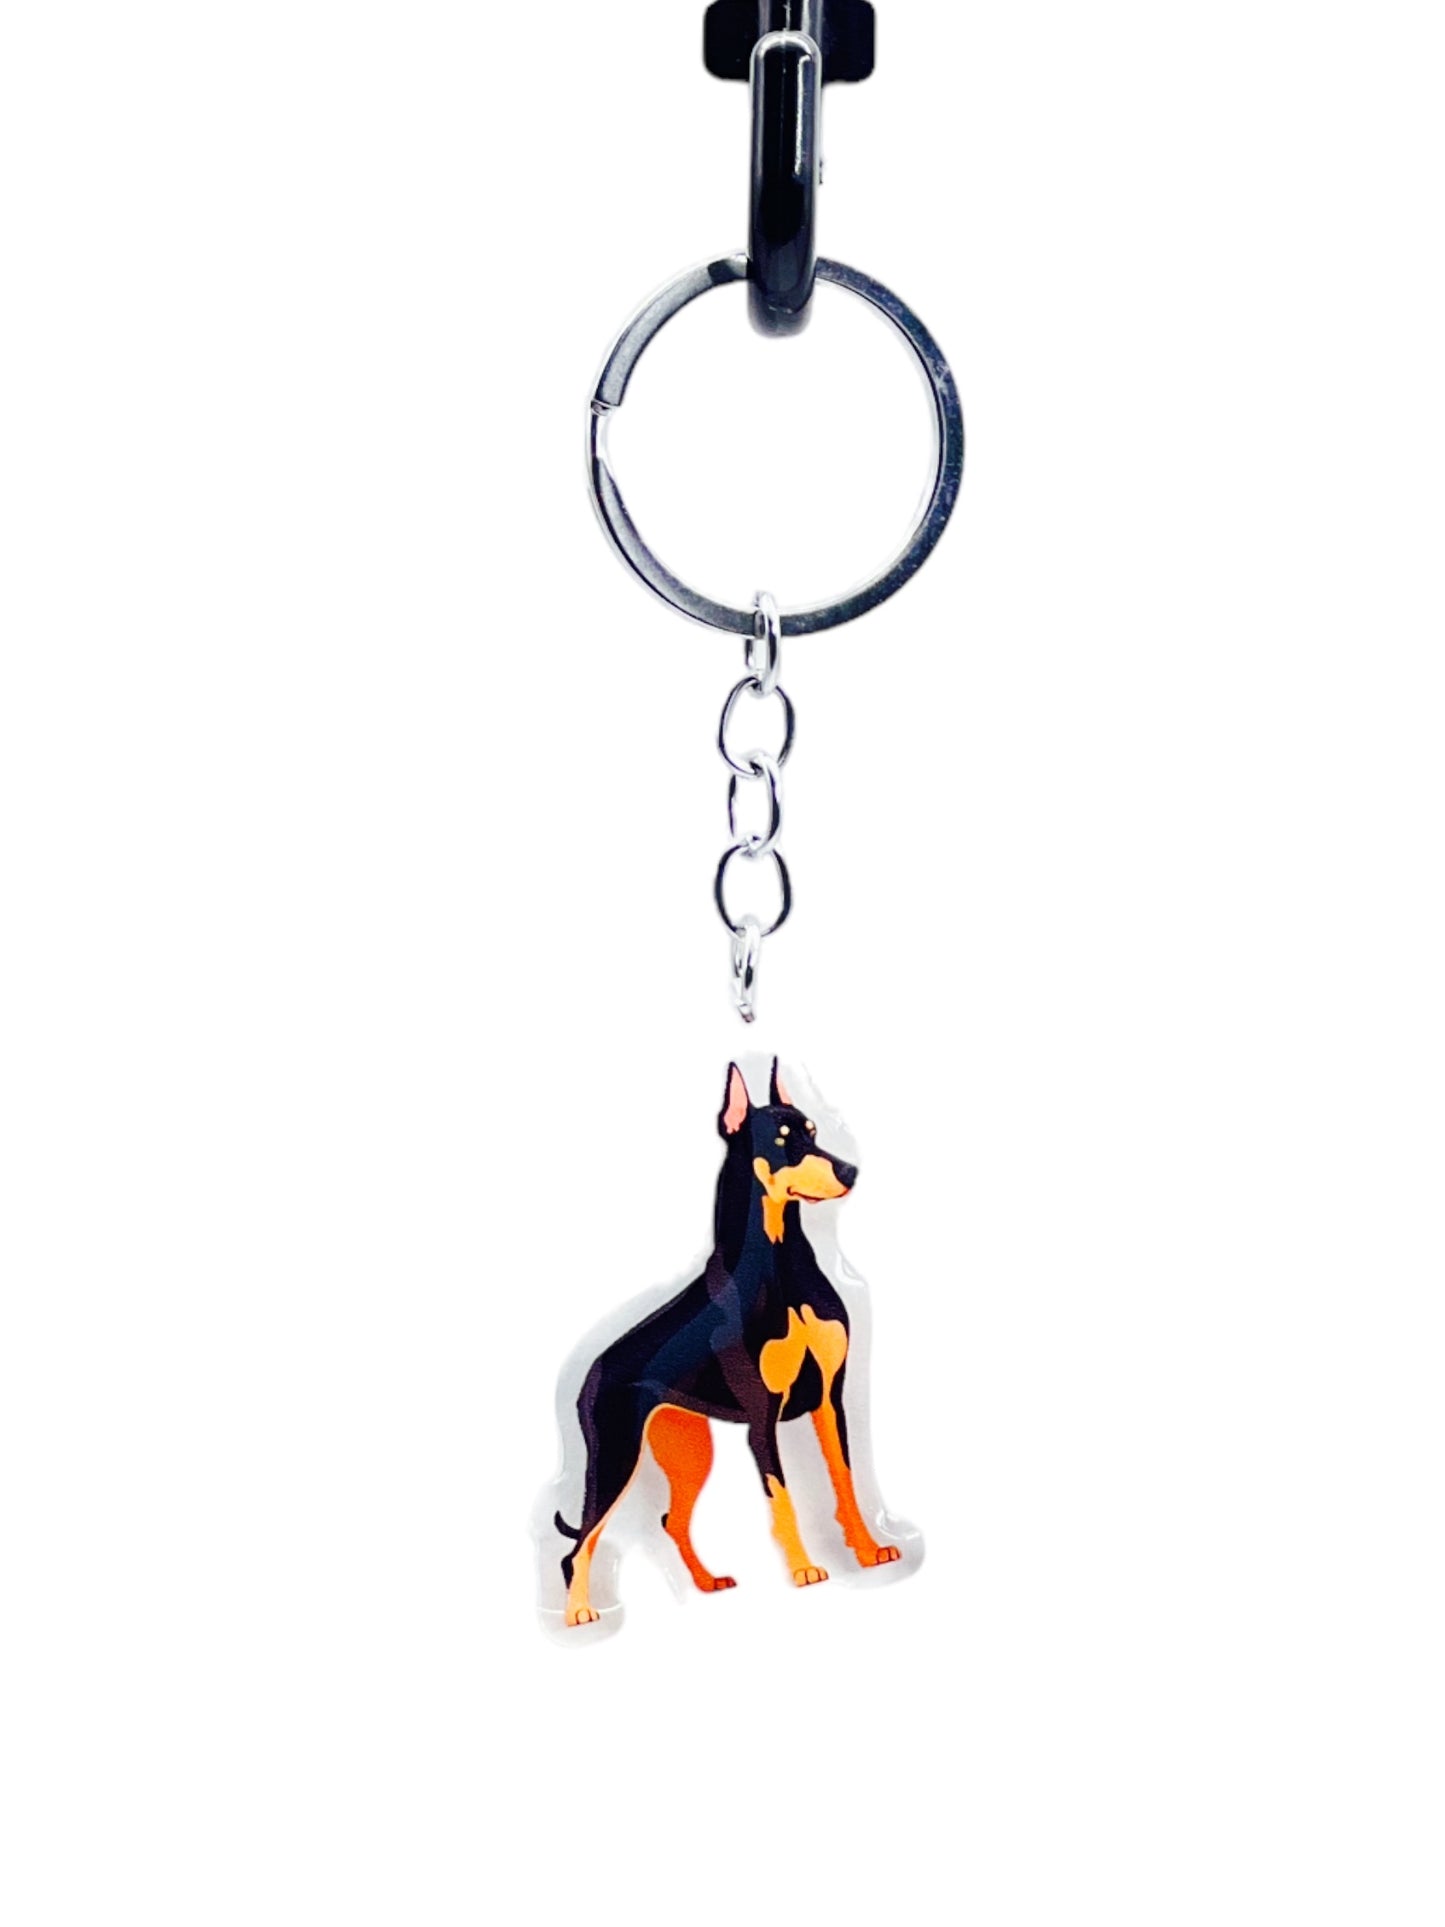 Dobreman Pinscher Dog Acrylic key chain